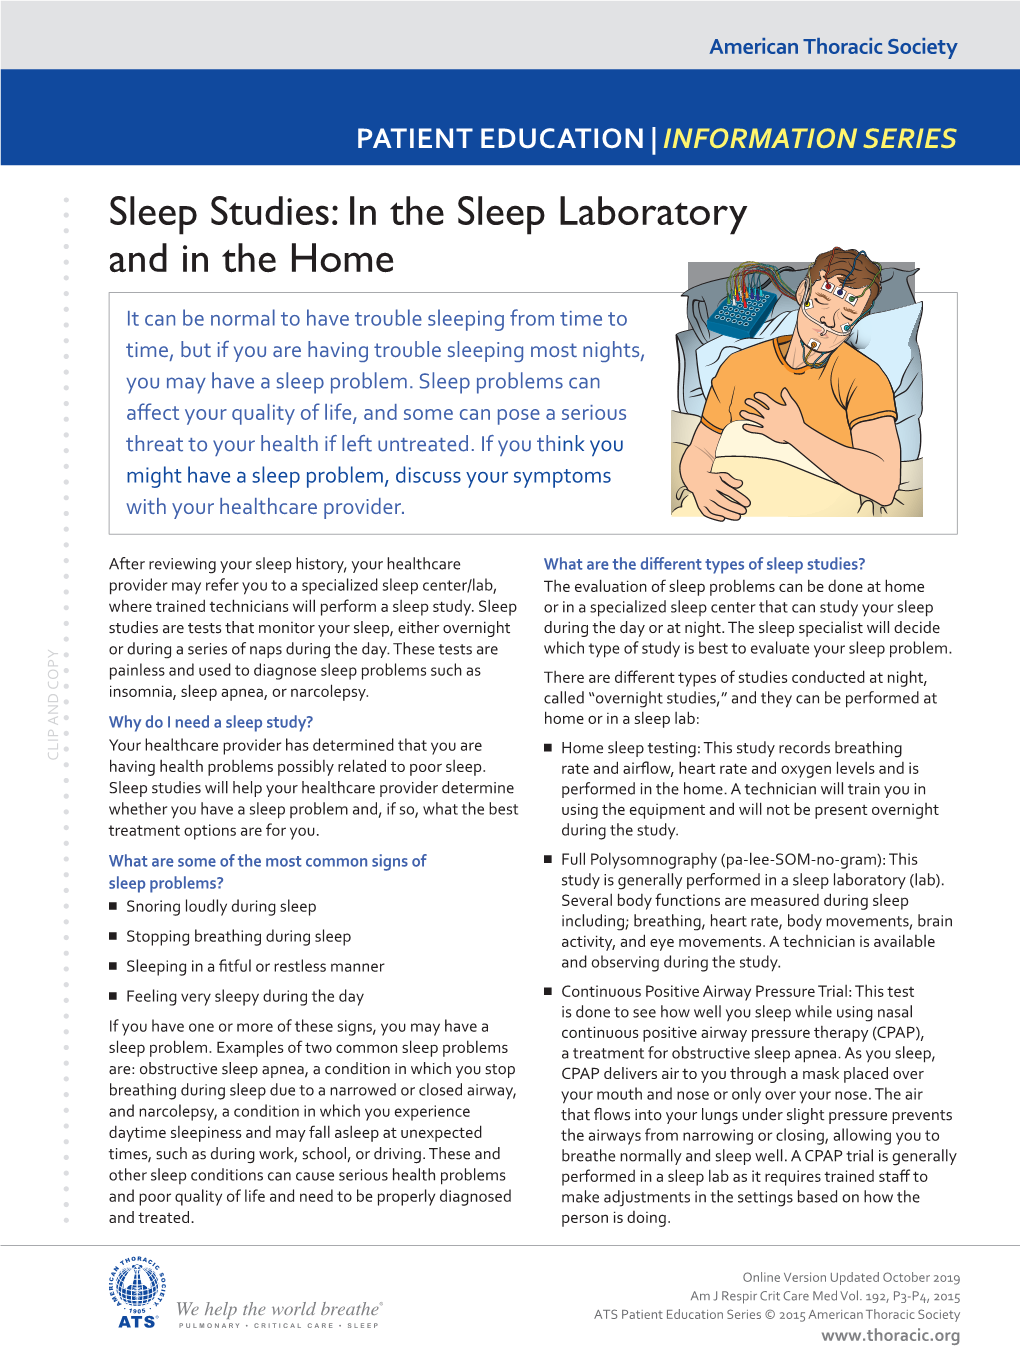 Sleep Studies: in the Sleep Laboratory and in the Home